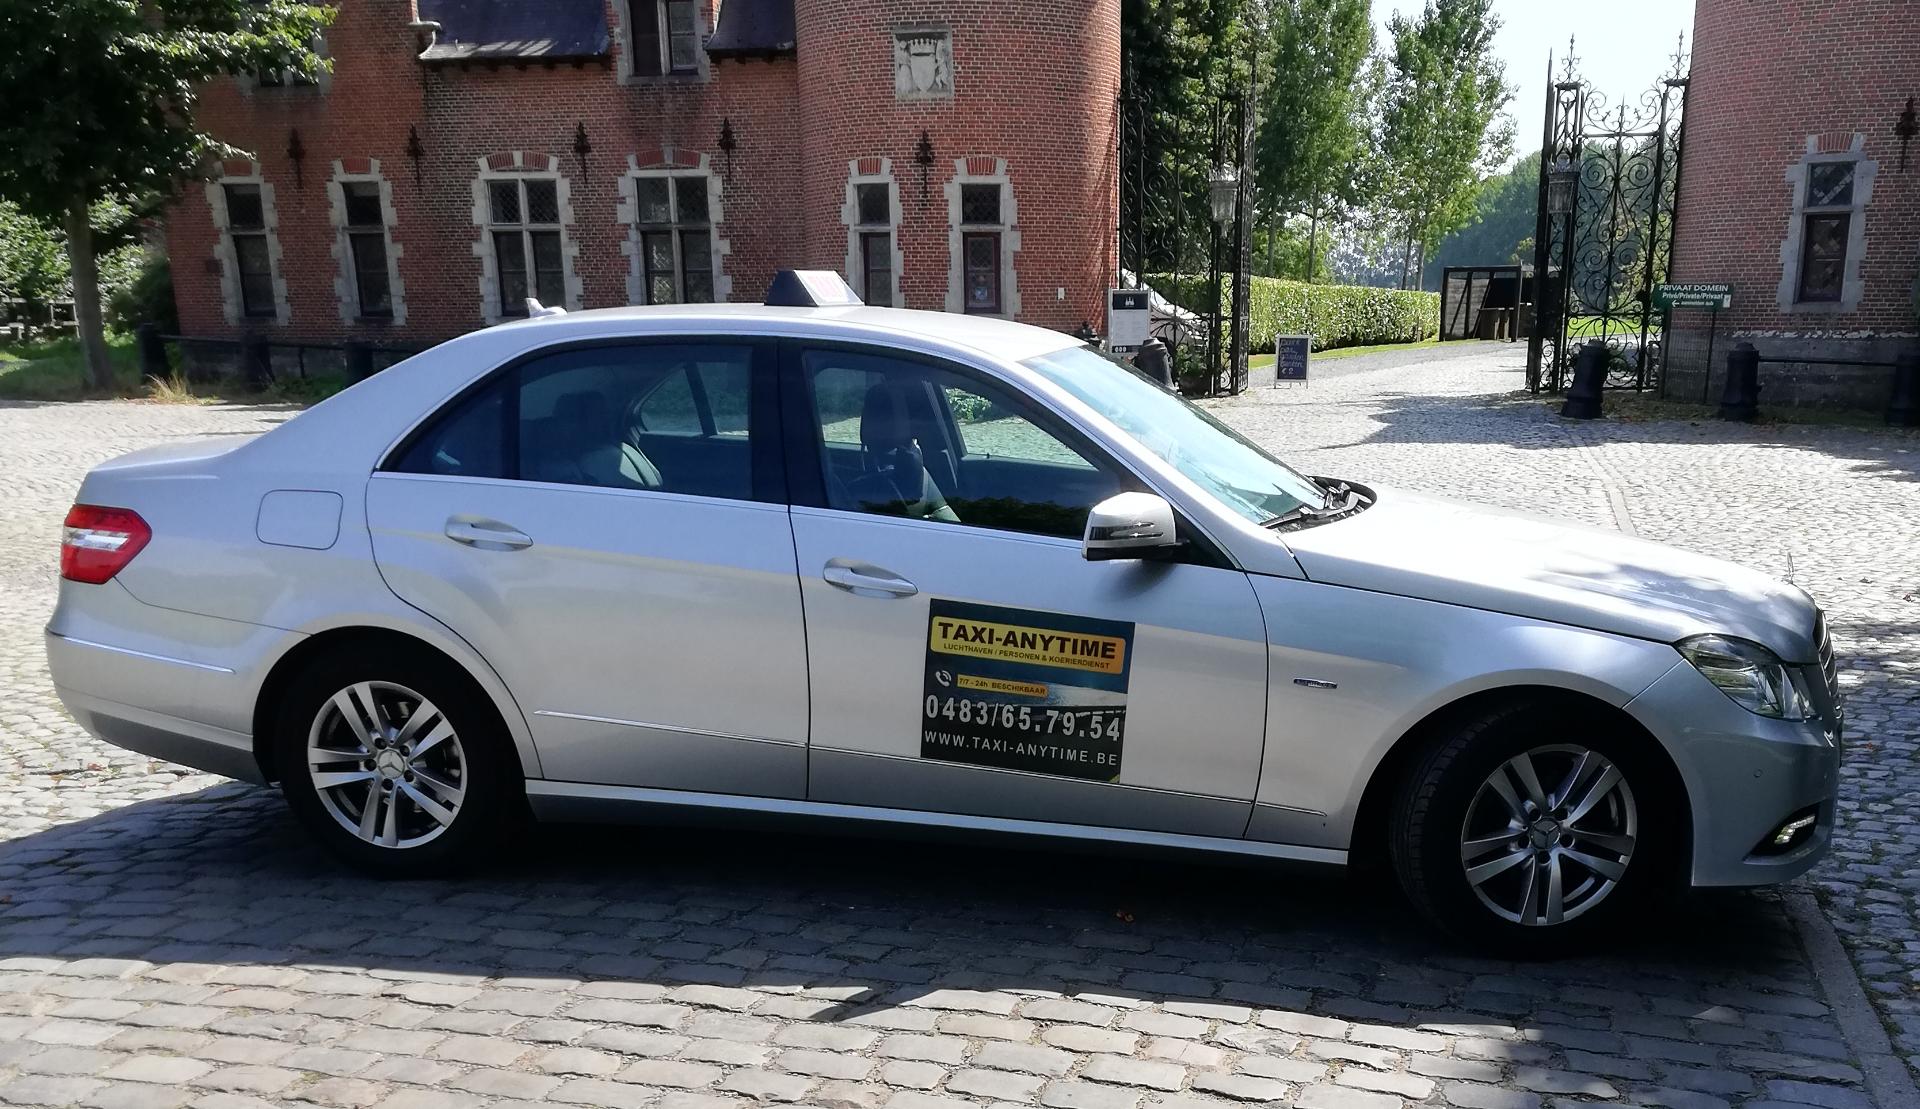 taxibedrijven Oostkamp Taxi Anytime